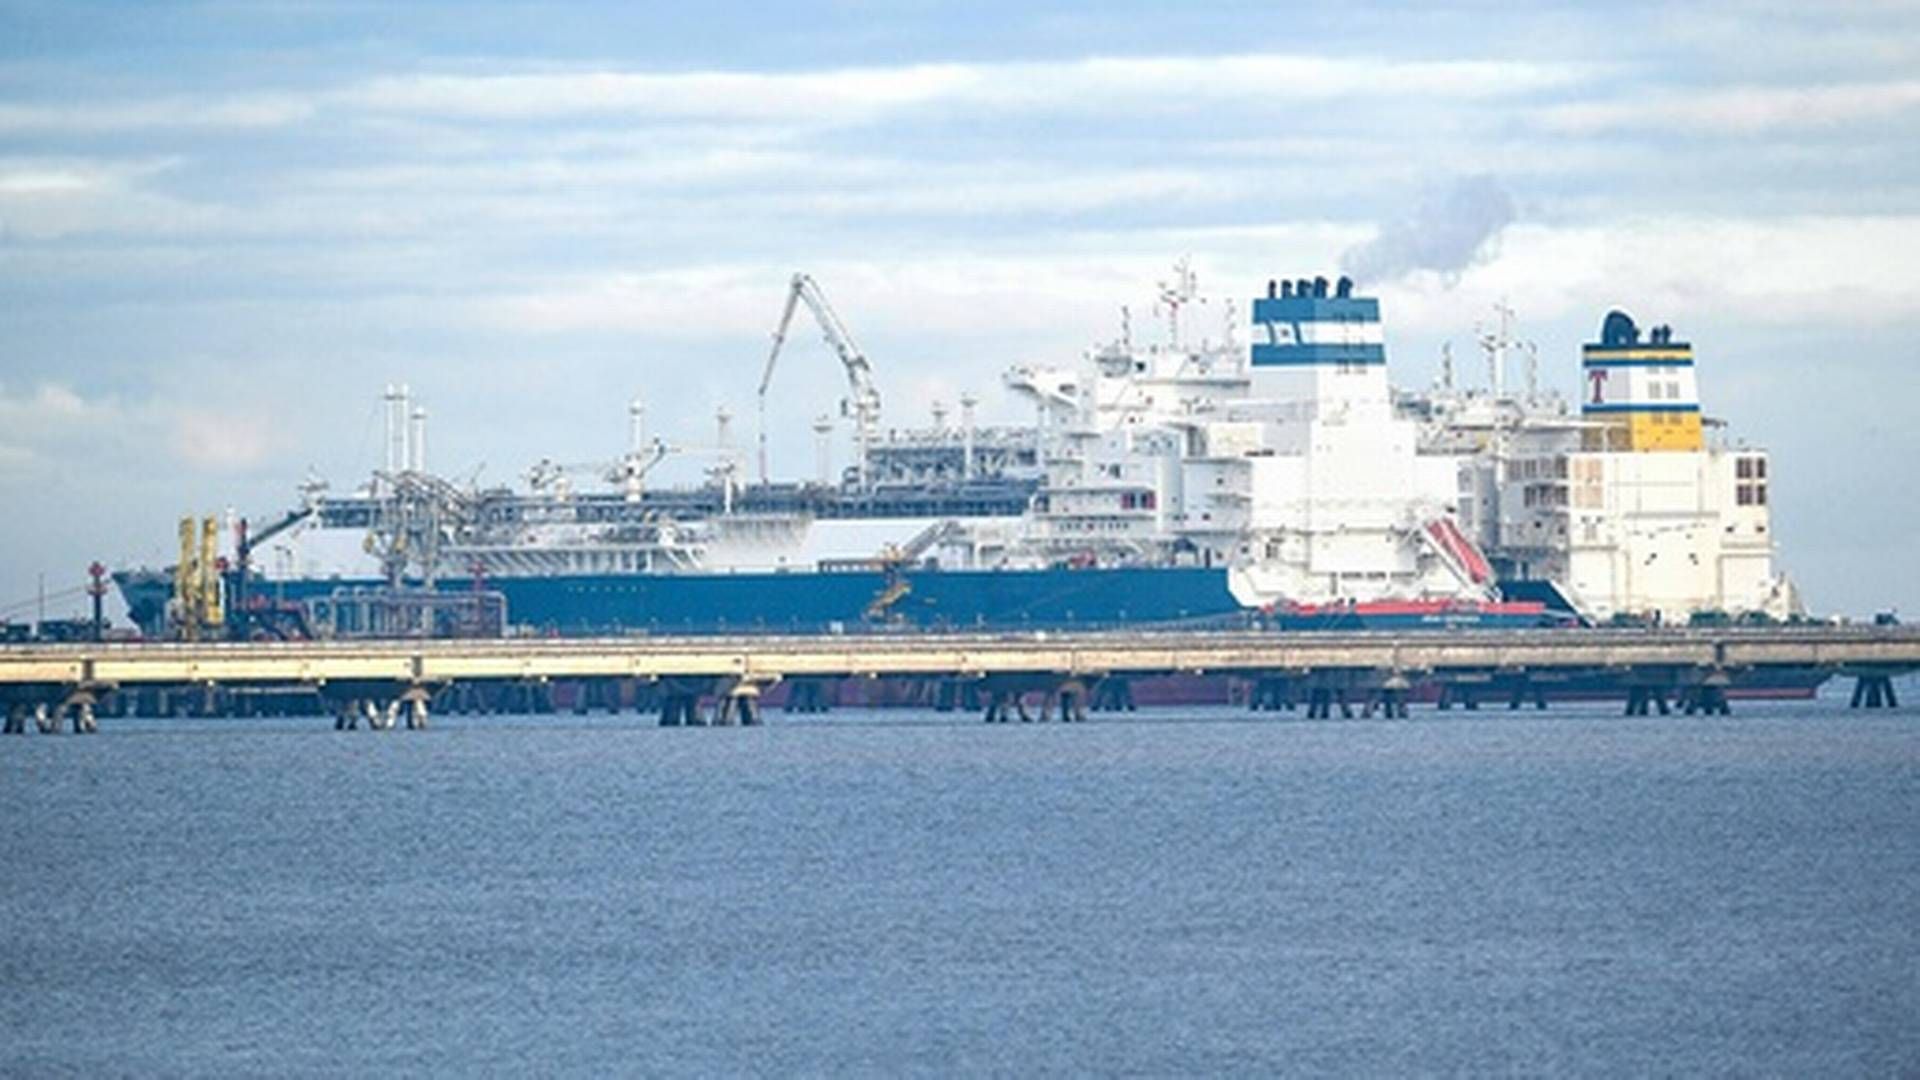 AMERIKANSK HJELP: Tankskipet Maria Energy ankom Wilhelmshaven tirsdag. | Foto: Sina Schuldt/dpa via AP / NTB